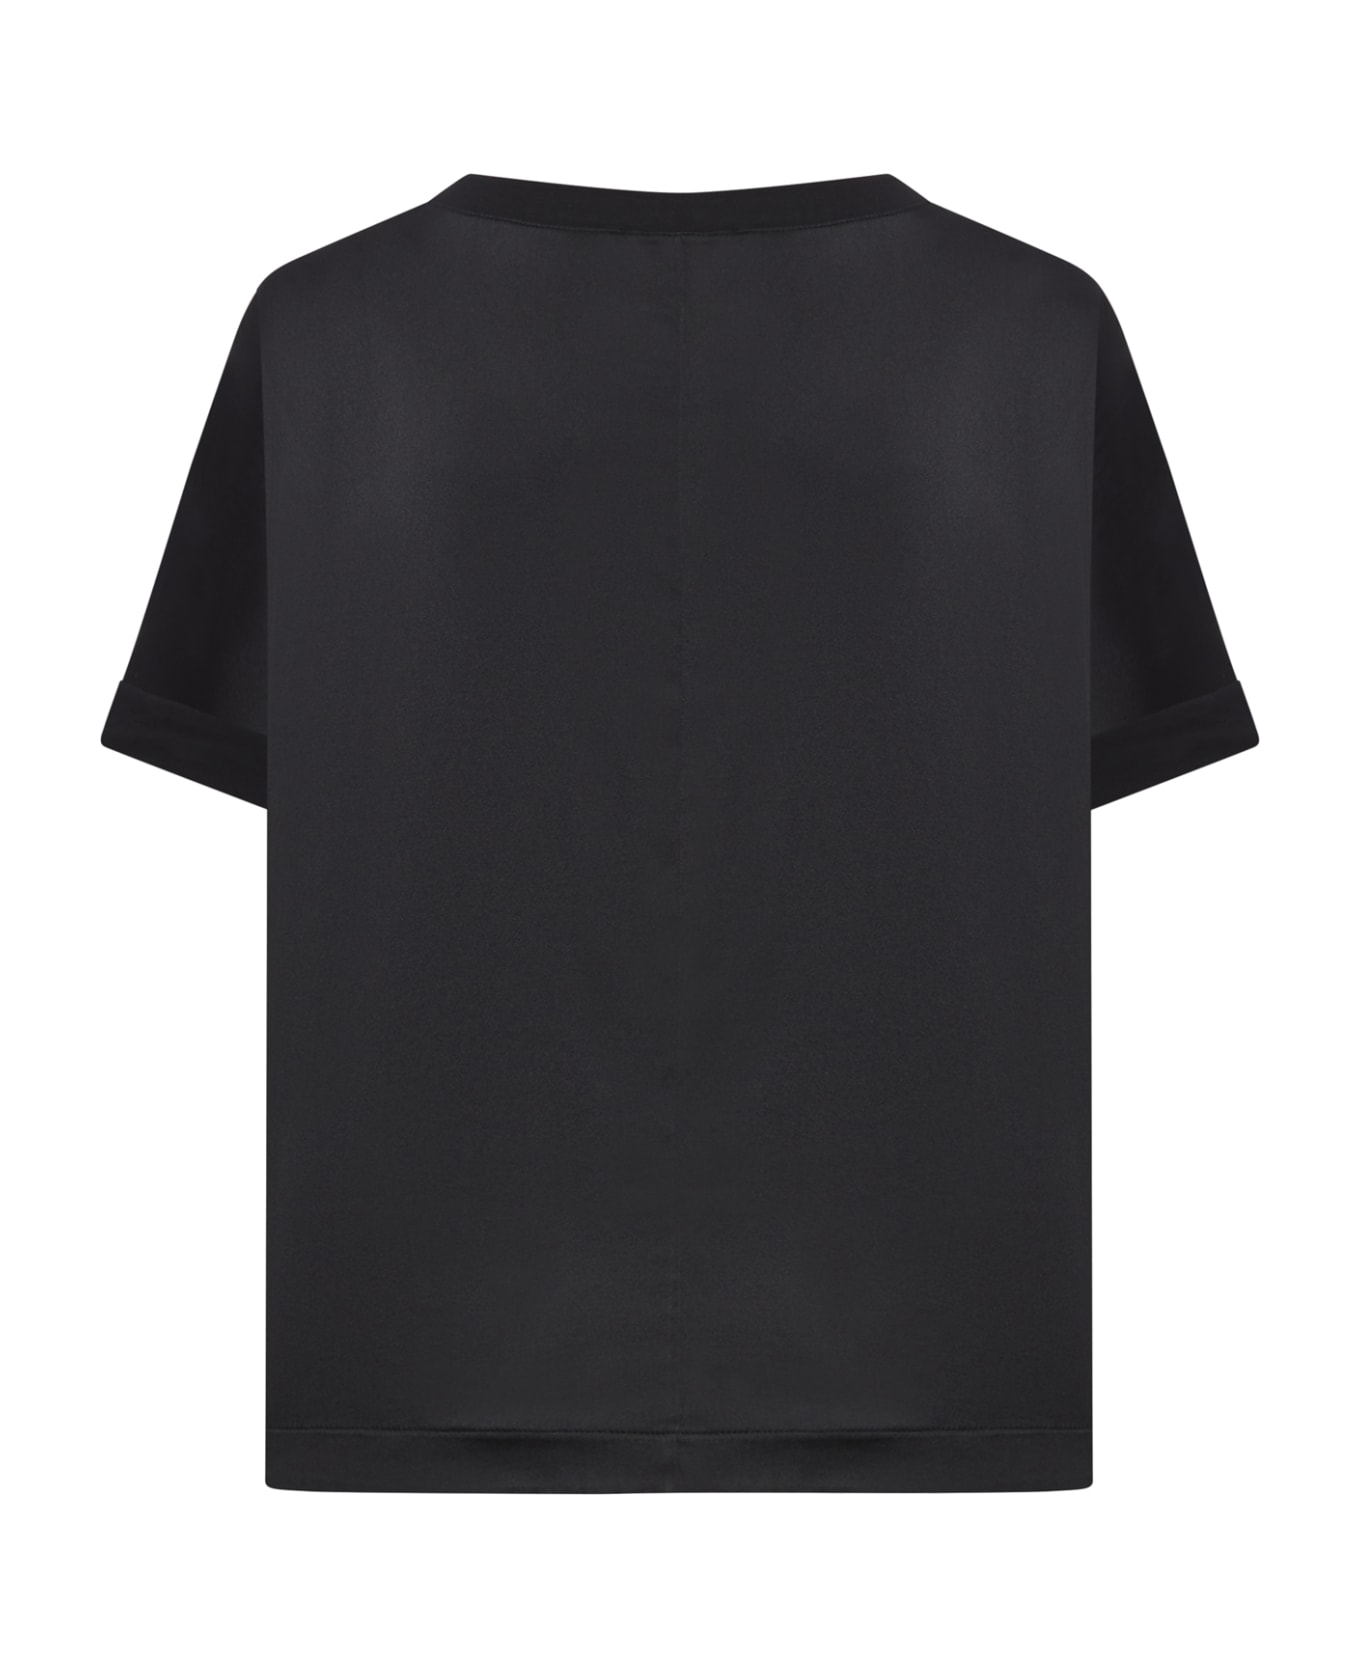 Transit Shirt - Black Tシャツ